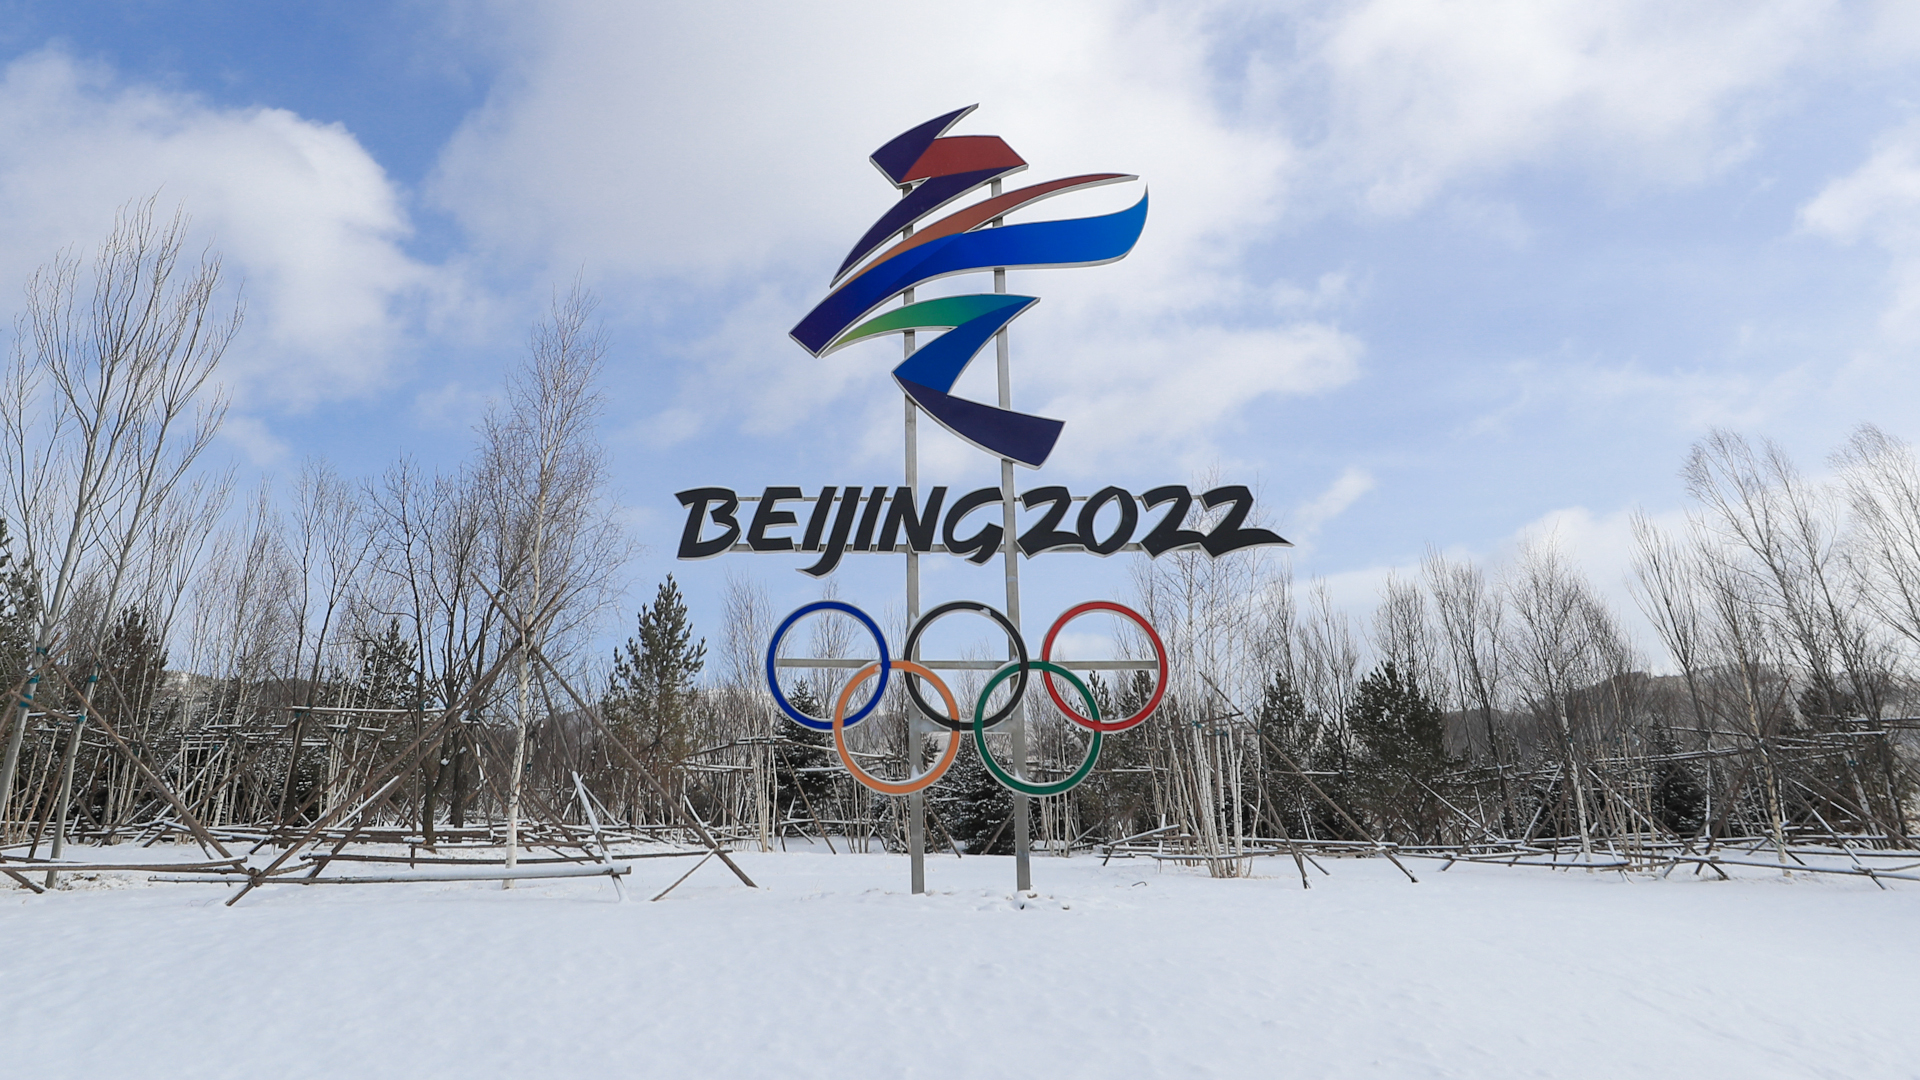 Olympic beijing 2022 live